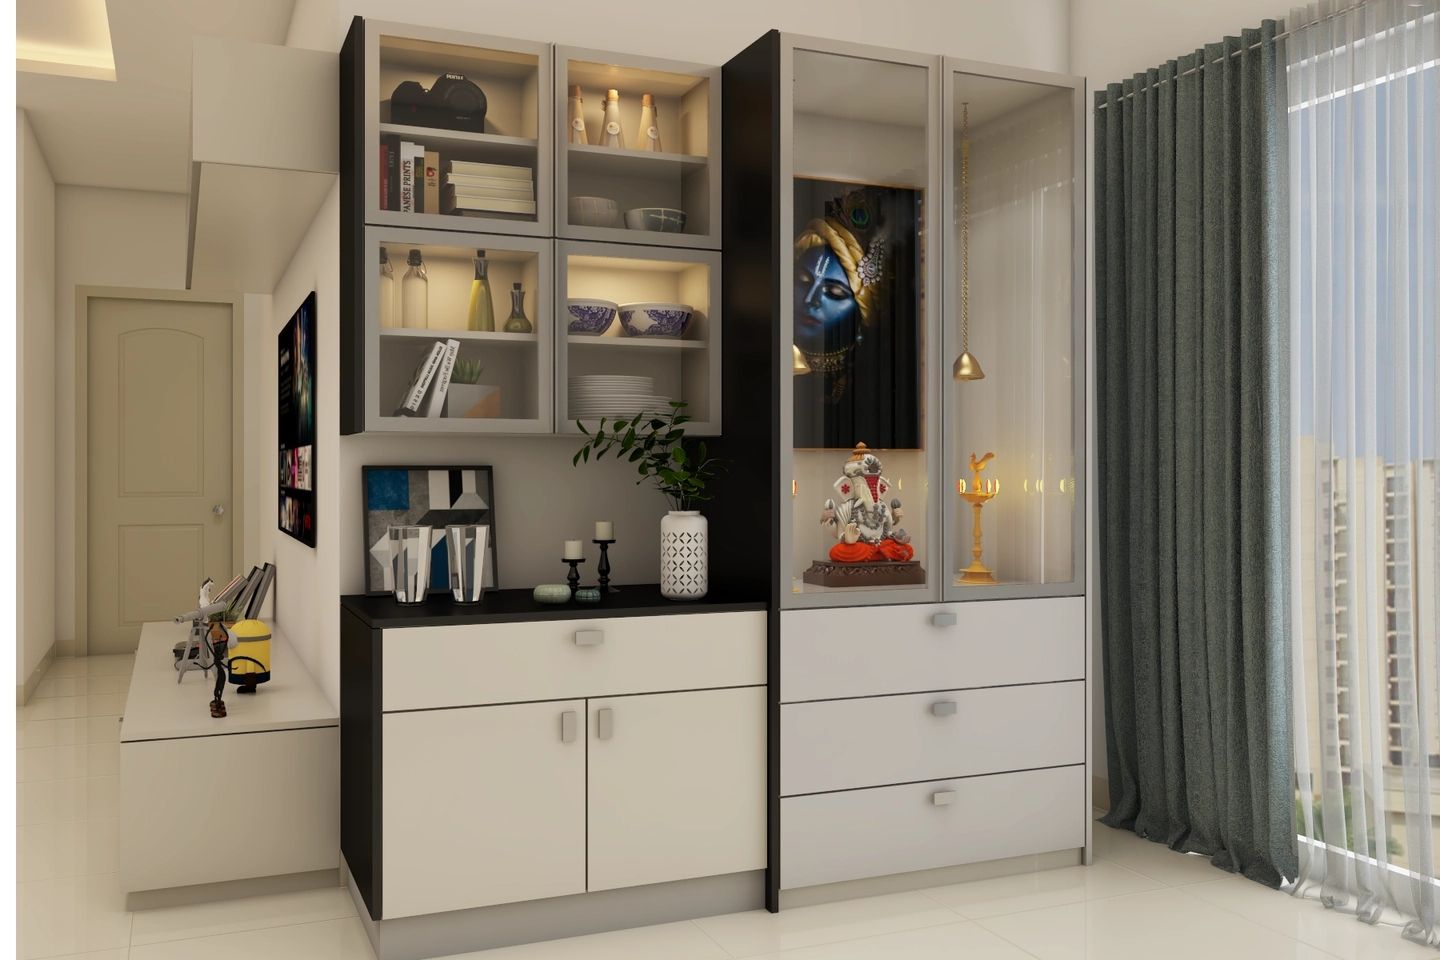 Modern Pooja Room Design With Glass Doors - Livspace